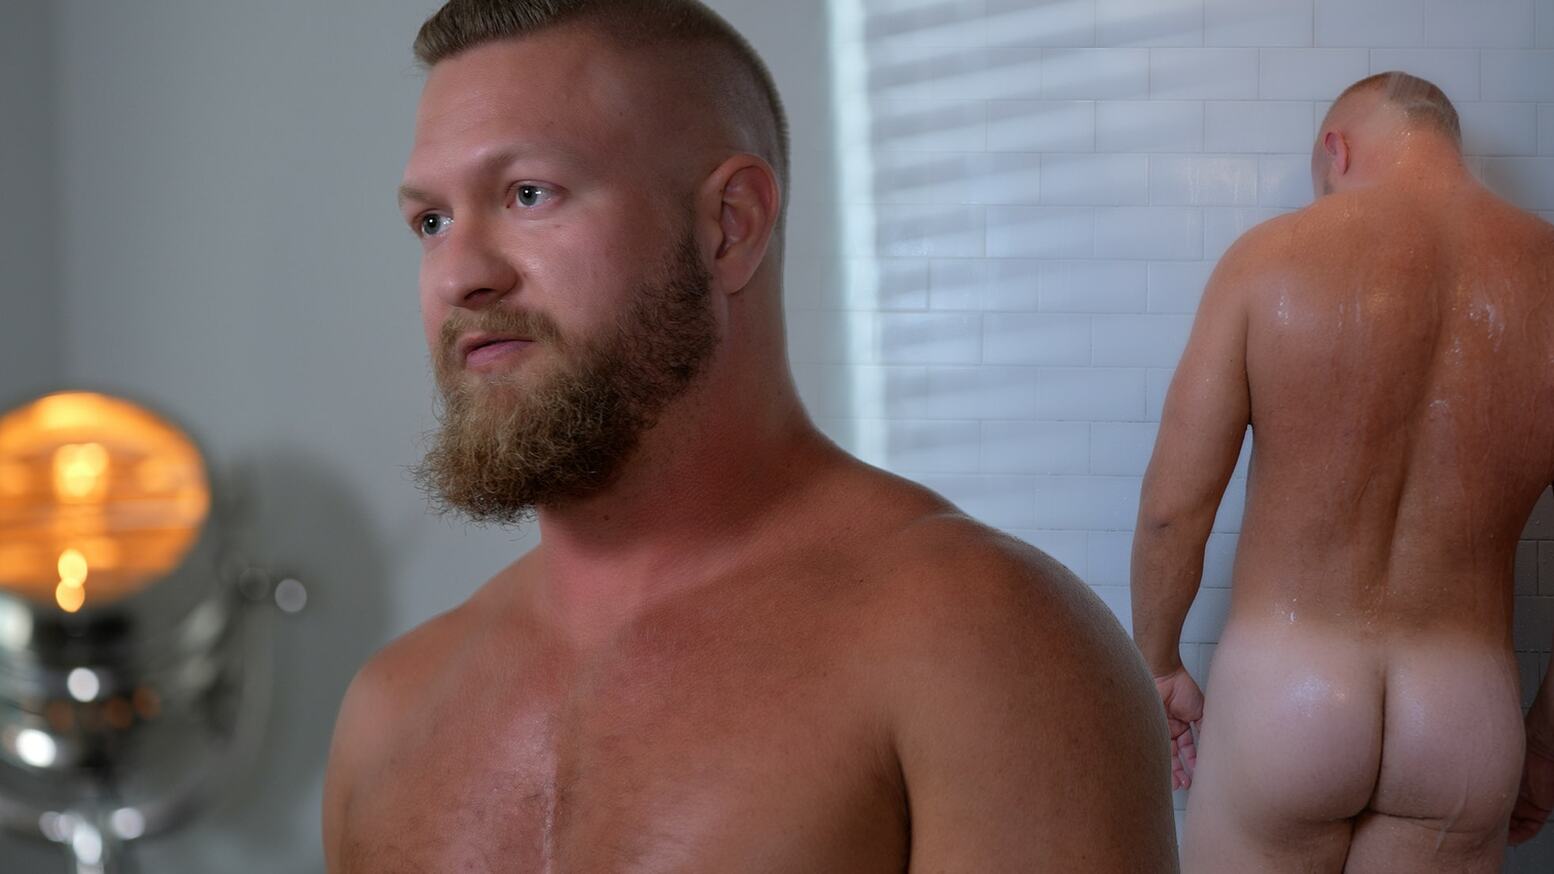 Naked Man with a Beard